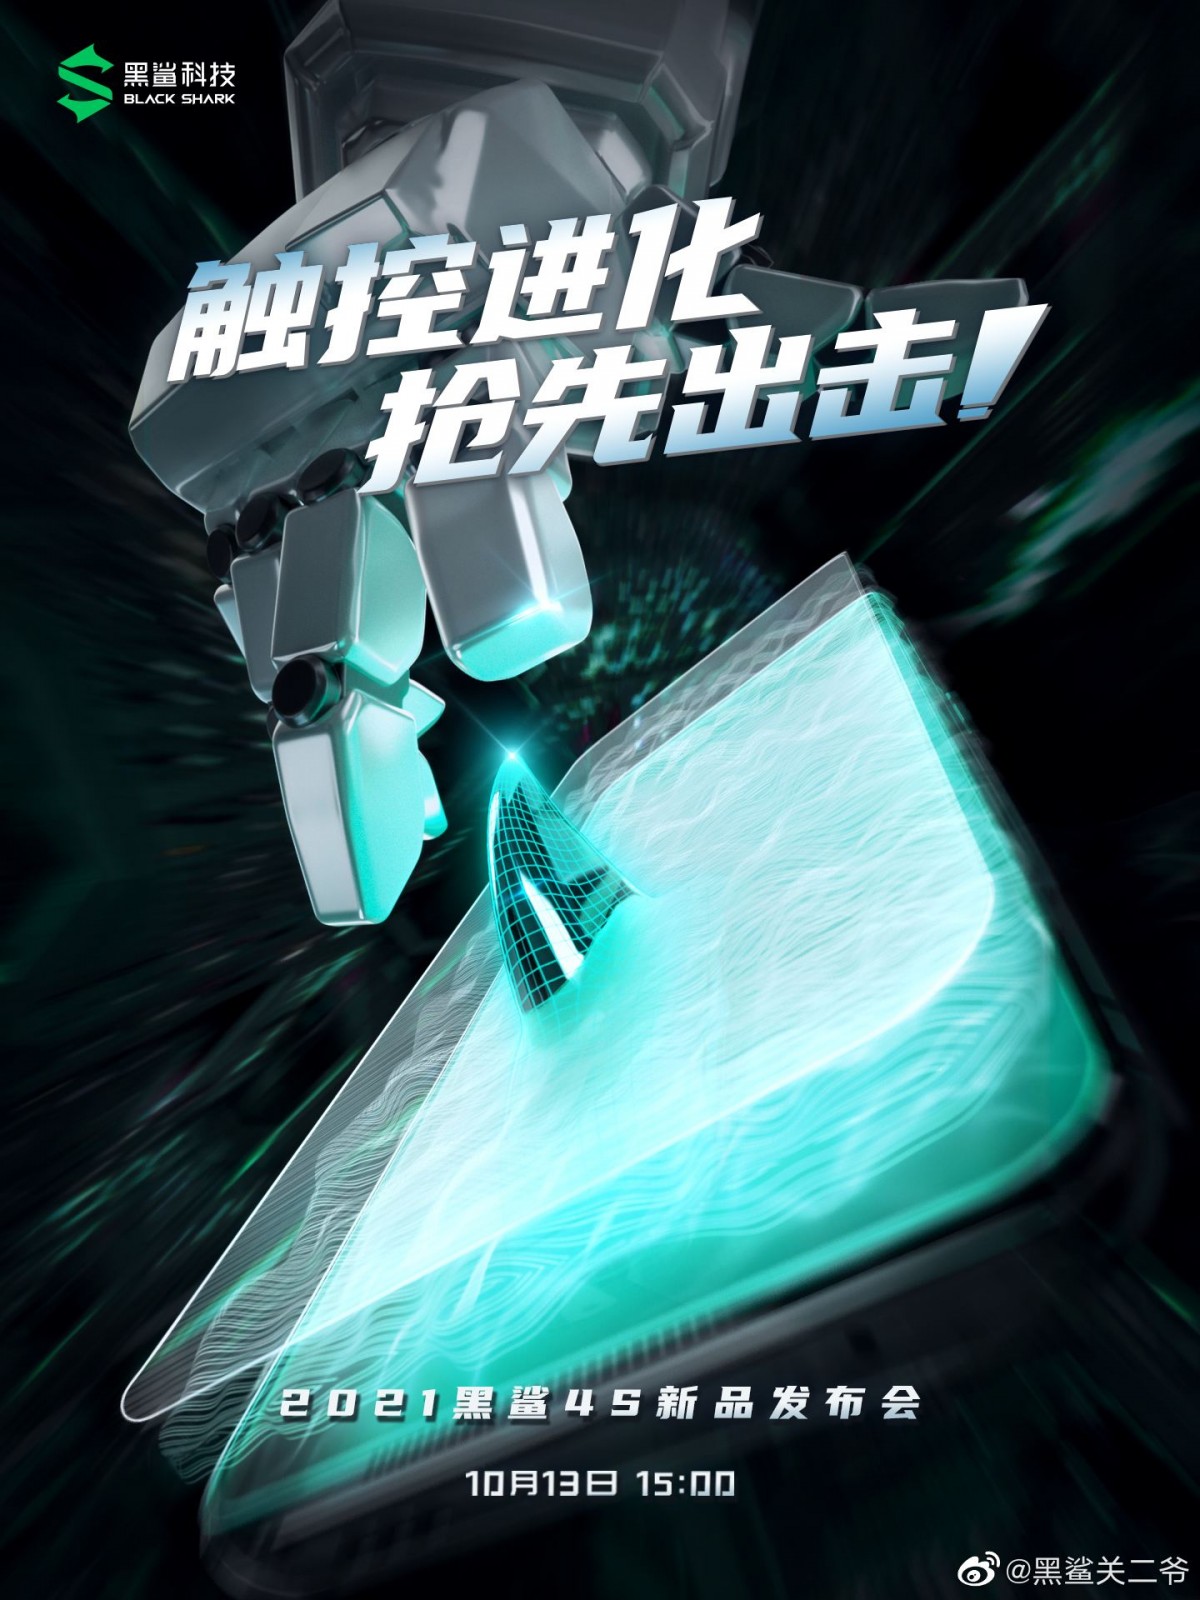 Xiaomi Black Shark 4S display promo poster